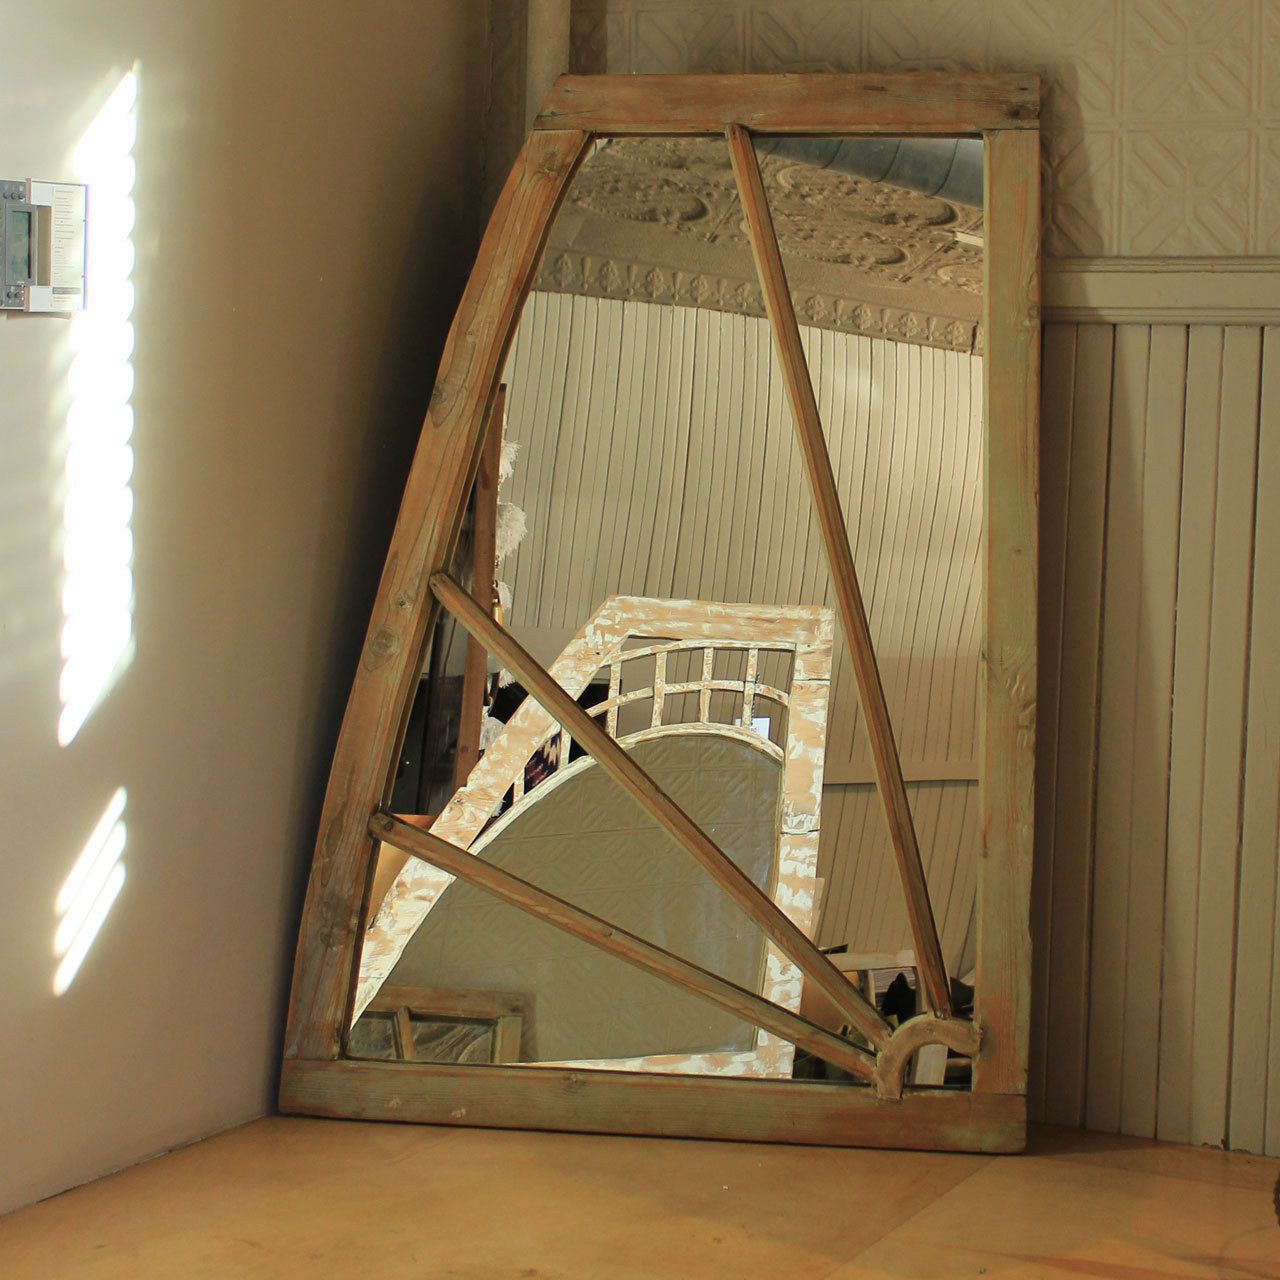 Wood Cadran mirror.